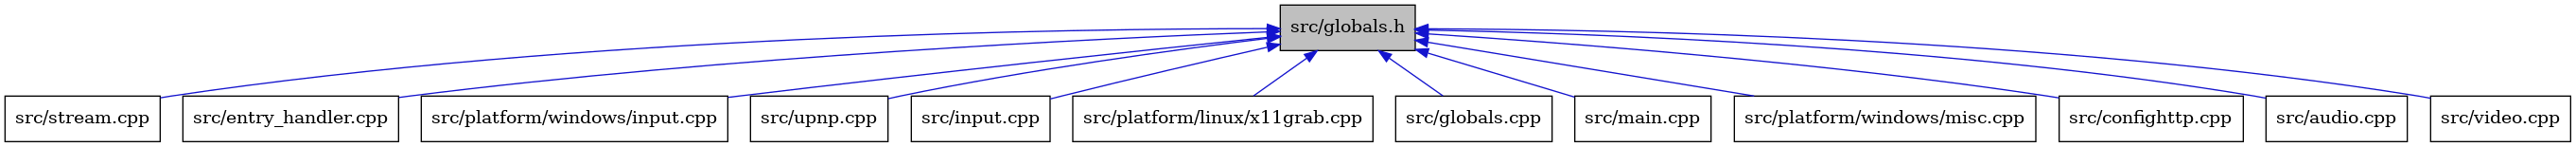 digraph {
    graph [bgcolor="#00000000"]
    node [shape=rectangle style=filled fillcolor="#FFFFFF" font=Helvetica padding=2]
    edge [color="#1414CE"]
    "1" [label="src/globals.h" tooltip="src/globals.h" fillcolor="#BFBFBF"]
    "11" [label="src/stream.cpp" tooltip="src/stream.cpp"]
    "4" [label="src/entry_handler.cpp" tooltip="src/entry_handler.cpp"]
    "9" [label="src/platform/windows/input.cpp" tooltip="src/platform/windows/input.cpp"]
    "12" [label="src/upnp.cpp" tooltip="src/upnp.cpp"]
    "6" [label="src/input.cpp" tooltip="src/input.cpp"]
    "8" [label="src/platform/linux/x11grab.cpp" tooltip="src/platform/linux/x11grab.cpp"]
    "5" [label="src/globals.cpp" tooltip="src/globals.cpp"]
    "7" [label="src/main.cpp" tooltip="src/main.cpp"]
    "10" [label="src/platform/windows/misc.cpp" tooltip="src/platform/windows/misc.cpp"]
    "3" [label="src/confighttp.cpp" tooltip="src/confighttp.cpp"]
    "2" [label="src/audio.cpp" tooltip="src/audio.cpp"]
    "13" [label="src/video.cpp" tooltip="src/video.cpp"]
    "1" -> "2" [dir=back tooltip="include"]
    "1" -> "3" [dir=back tooltip="include"]
    "1" -> "4" [dir=back tooltip="include"]
    "1" -> "5" [dir=back tooltip="include"]
    "1" -> "6" [dir=back tooltip="include"]
    "1" -> "7" [dir=back tooltip="include"]
    "1" -> "8" [dir=back tooltip="include"]
    "1" -> "9" [dir=back tooltip="include"]
    "1" -> "10" [dir=back tooltip="include"]
    "1" -> "11" [dir=back tooltip="include"]
    "1" -> "12" [dir=back tooltip="include"]
    "1" -> "13" [dir=back tooltip="include"]
}